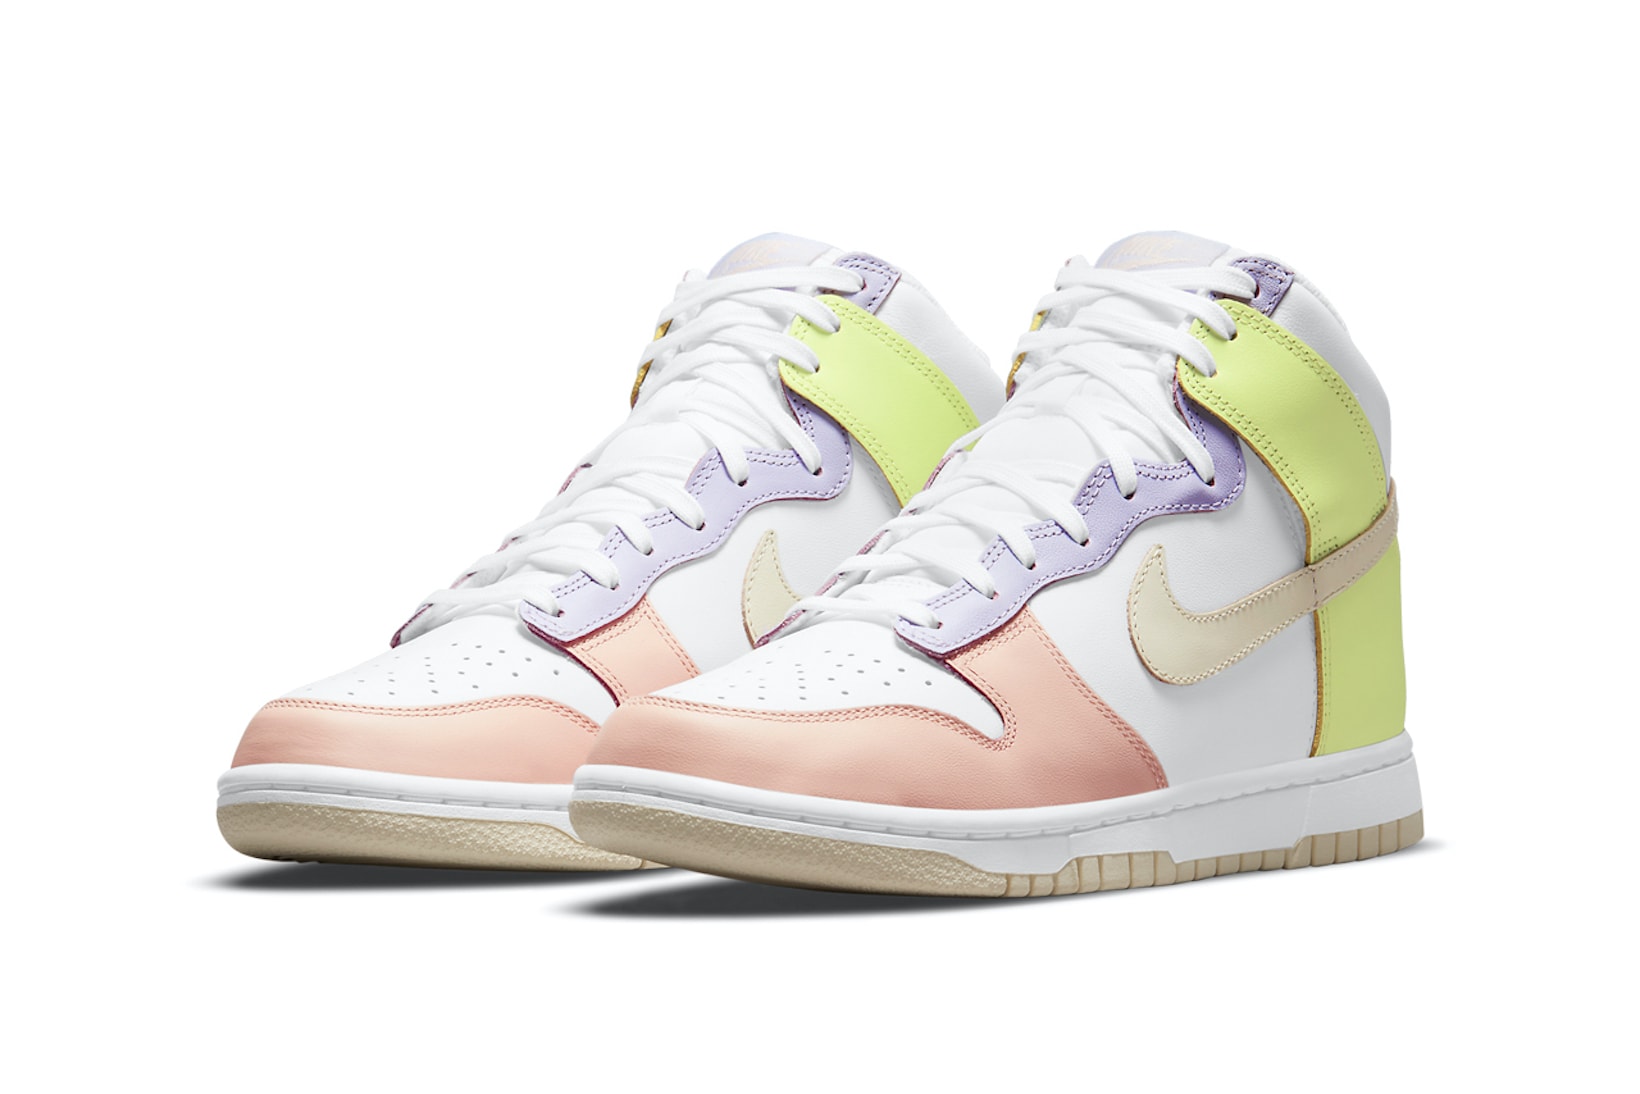 Nike Women's Dunk High Lemon Twist Sneakers Footwear Shoes Kicks Yellow Pink White Purple Lateral